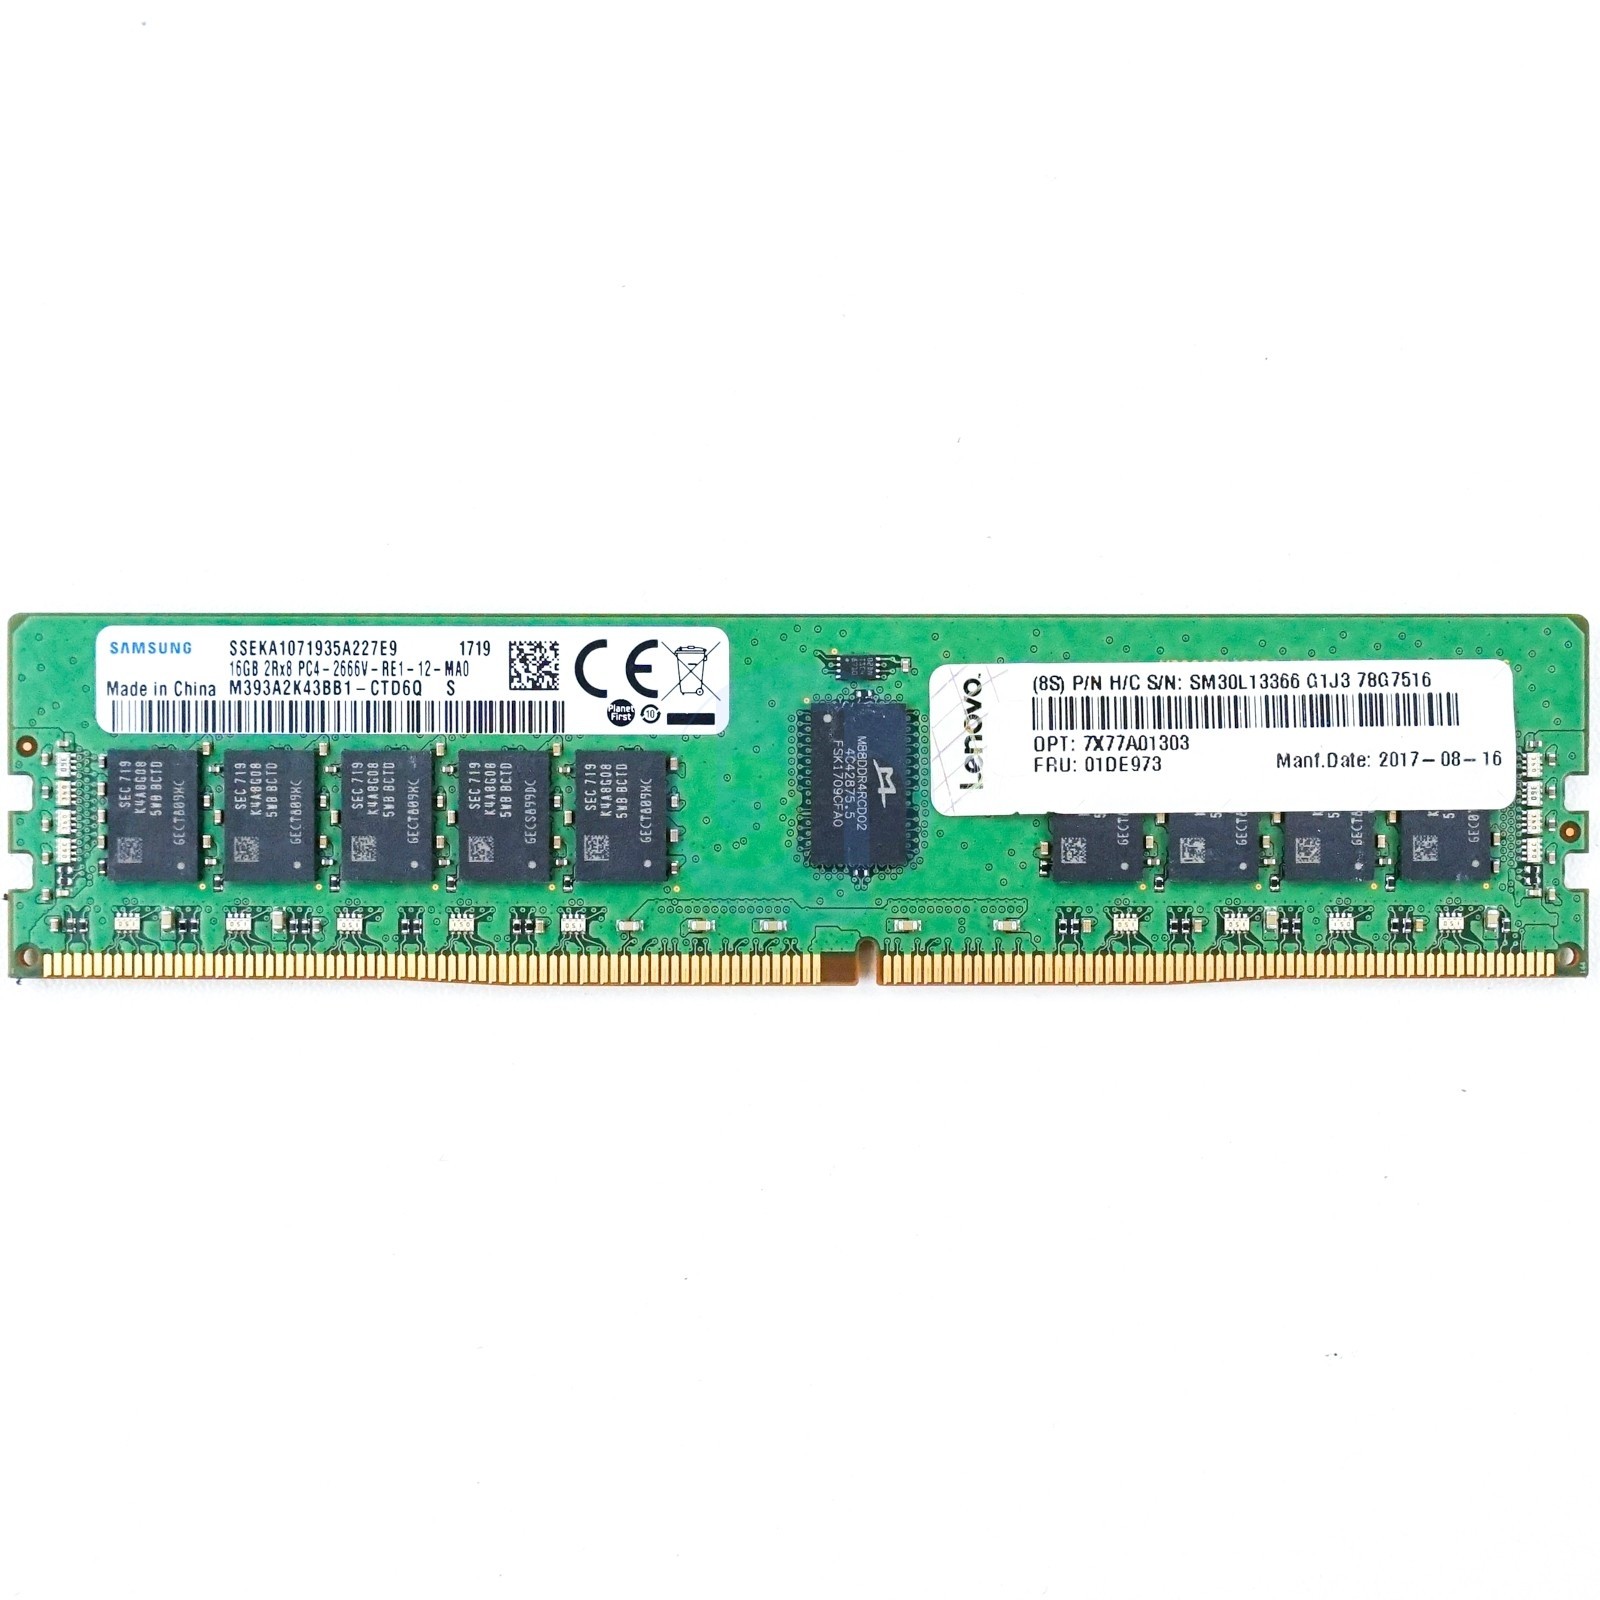 Lenovo (01DE973) - 16GB TruDDR4 PC4-21300V-R (2RX8, DDR4-2600MHz) RAM